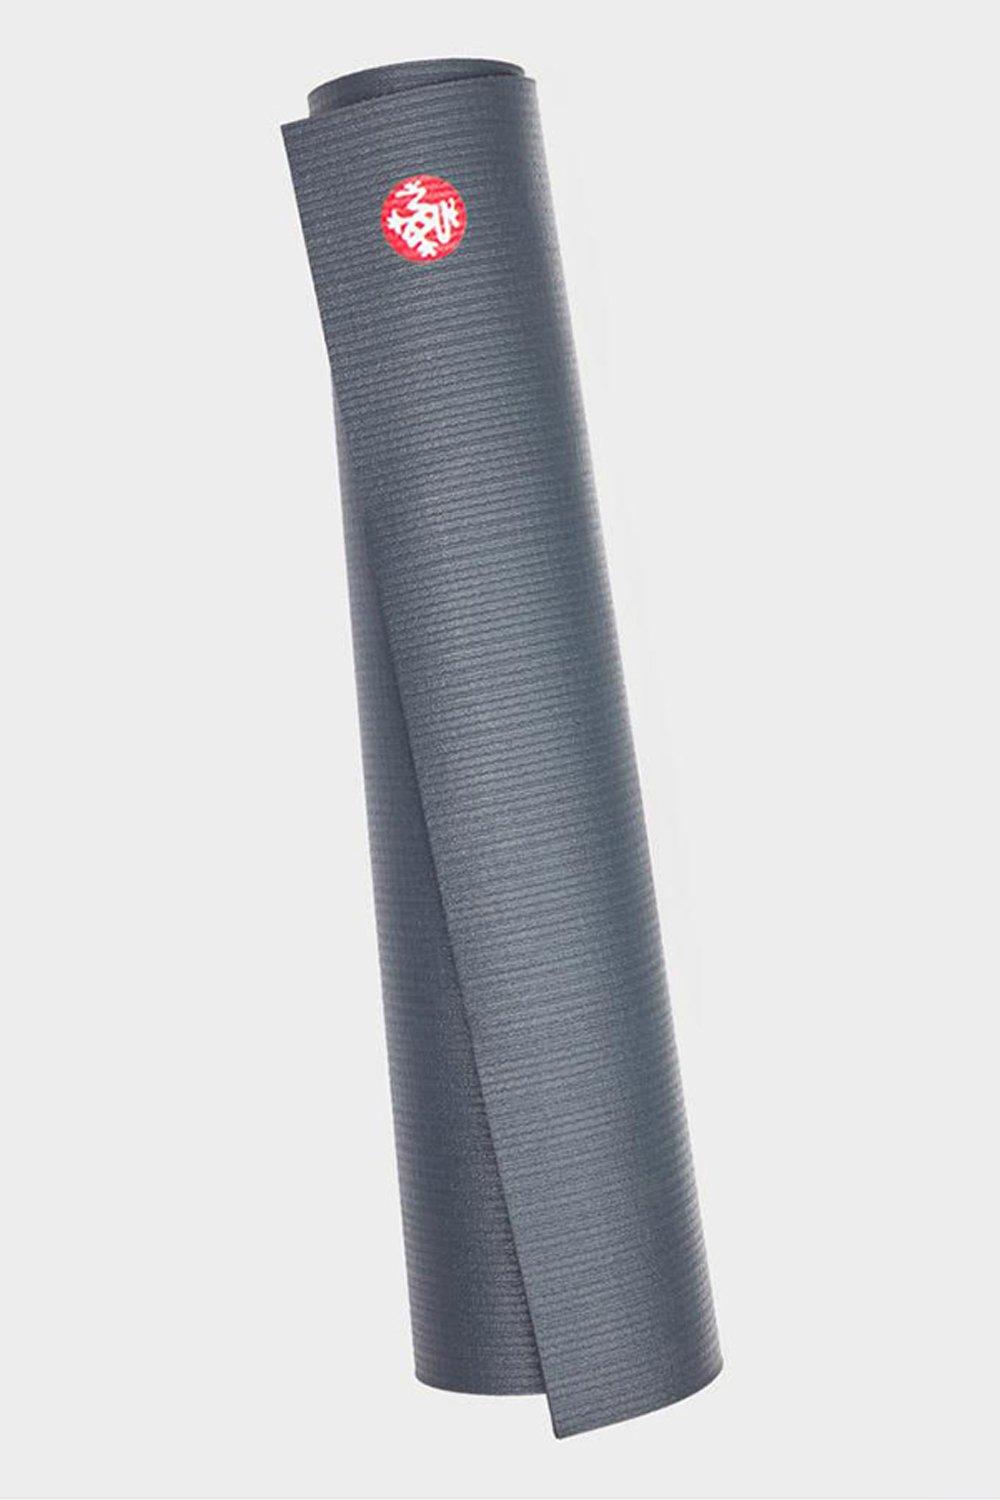 PROlite Standard 71 Inch Yoga Mat 4.7mm